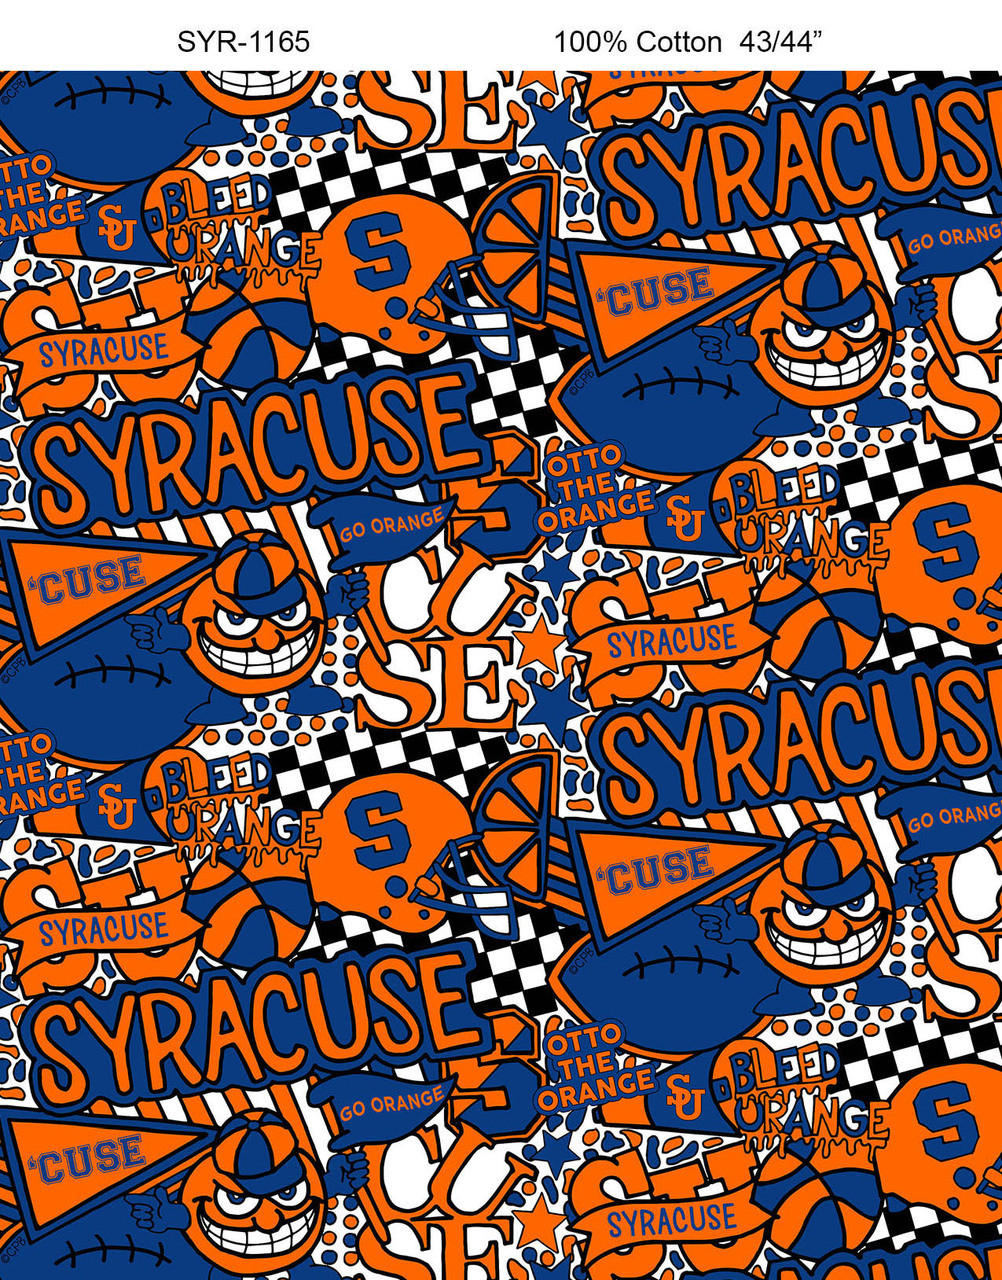 Syracuse University Orange Cotton Fabric with Pop Art Print and Matching Solid Cotton Fabrics